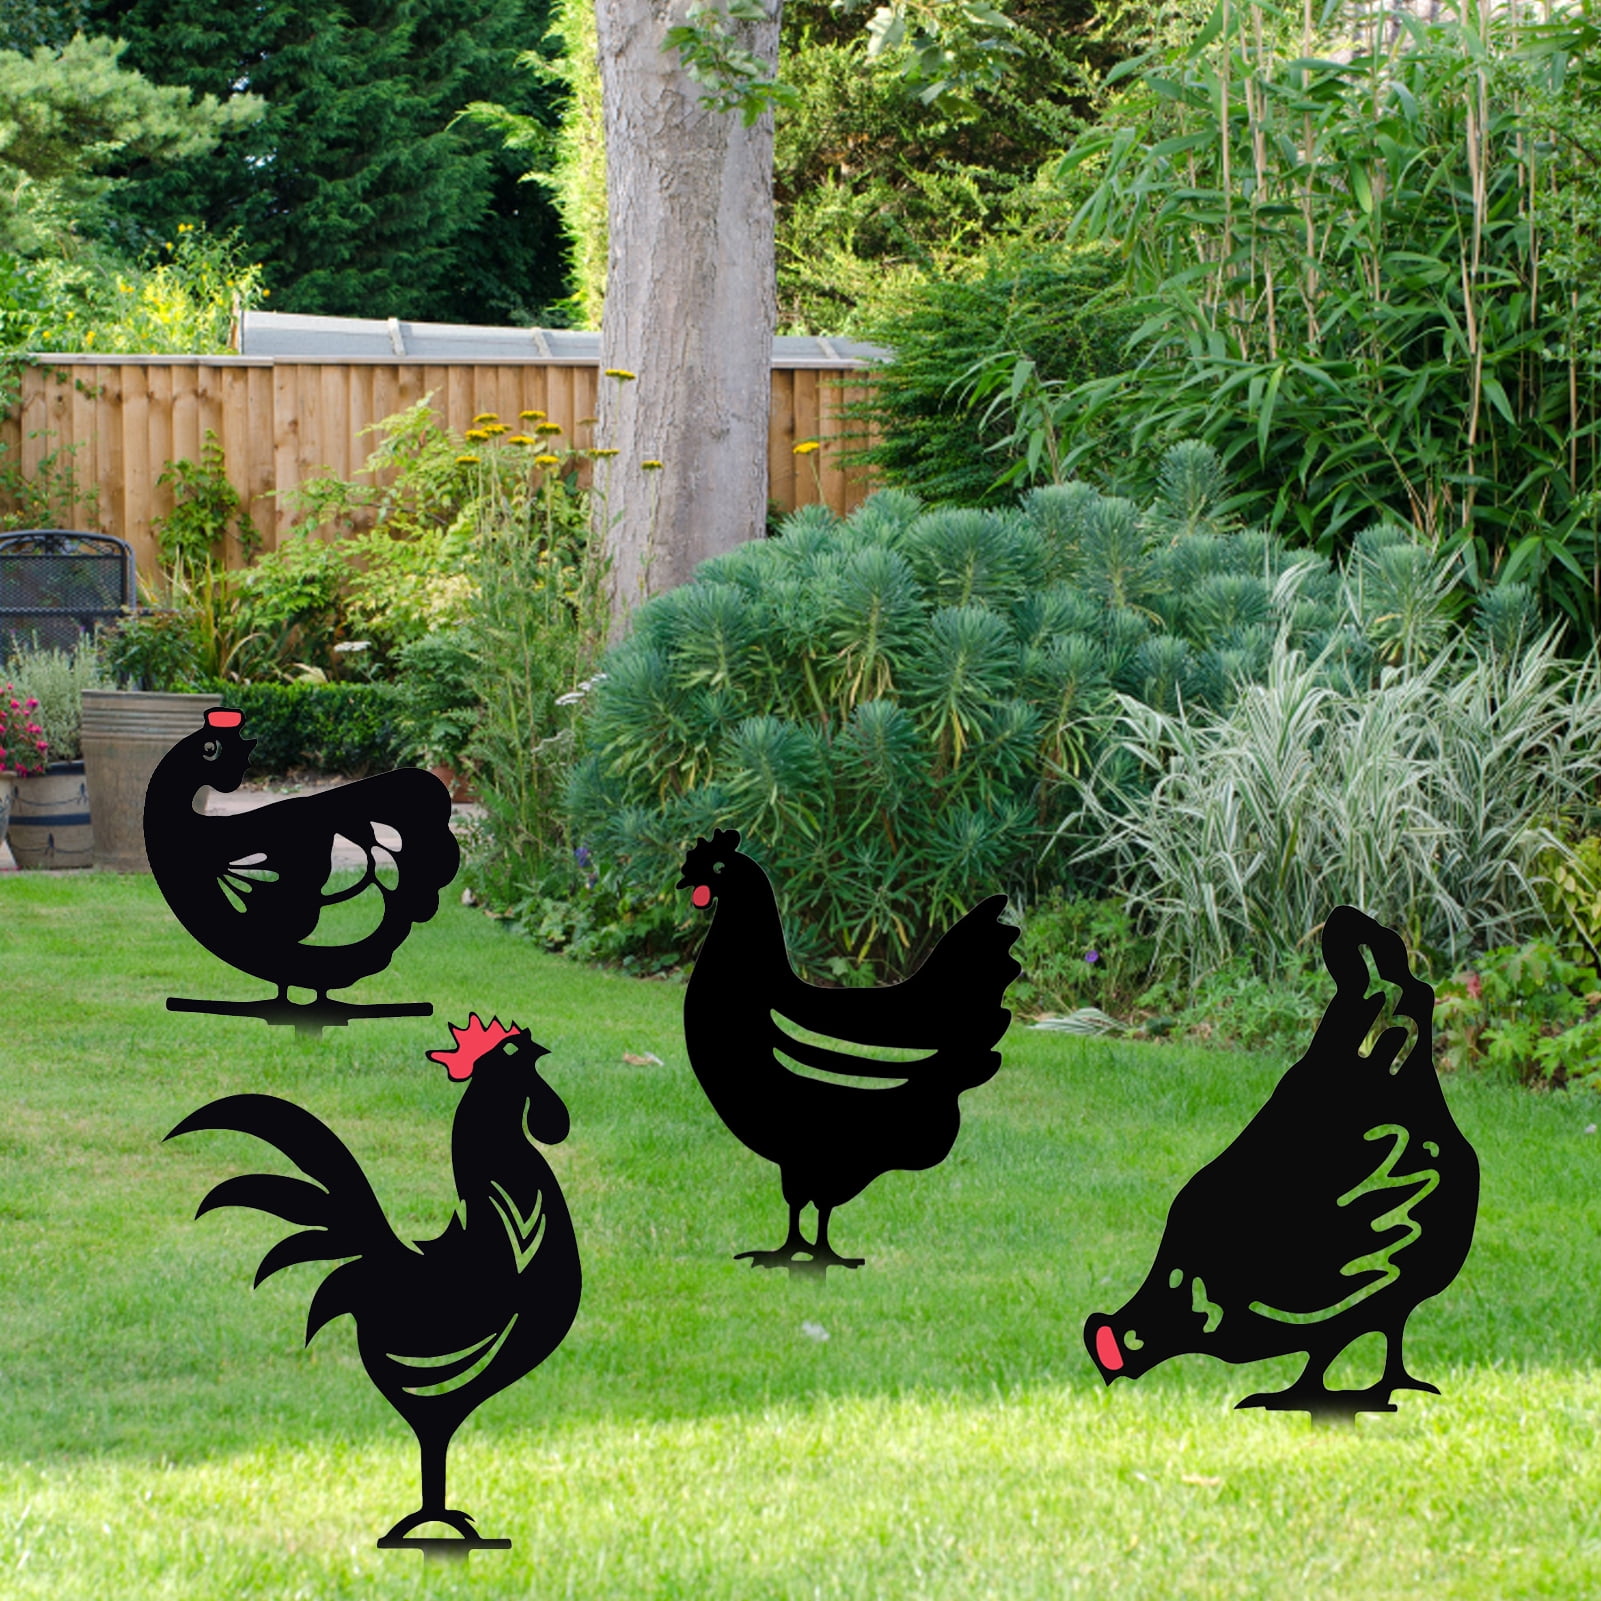 Outdoor Garden Ornaments Chicken Rabbit Yard Art Backyard Home Lawn Stakes Decor 